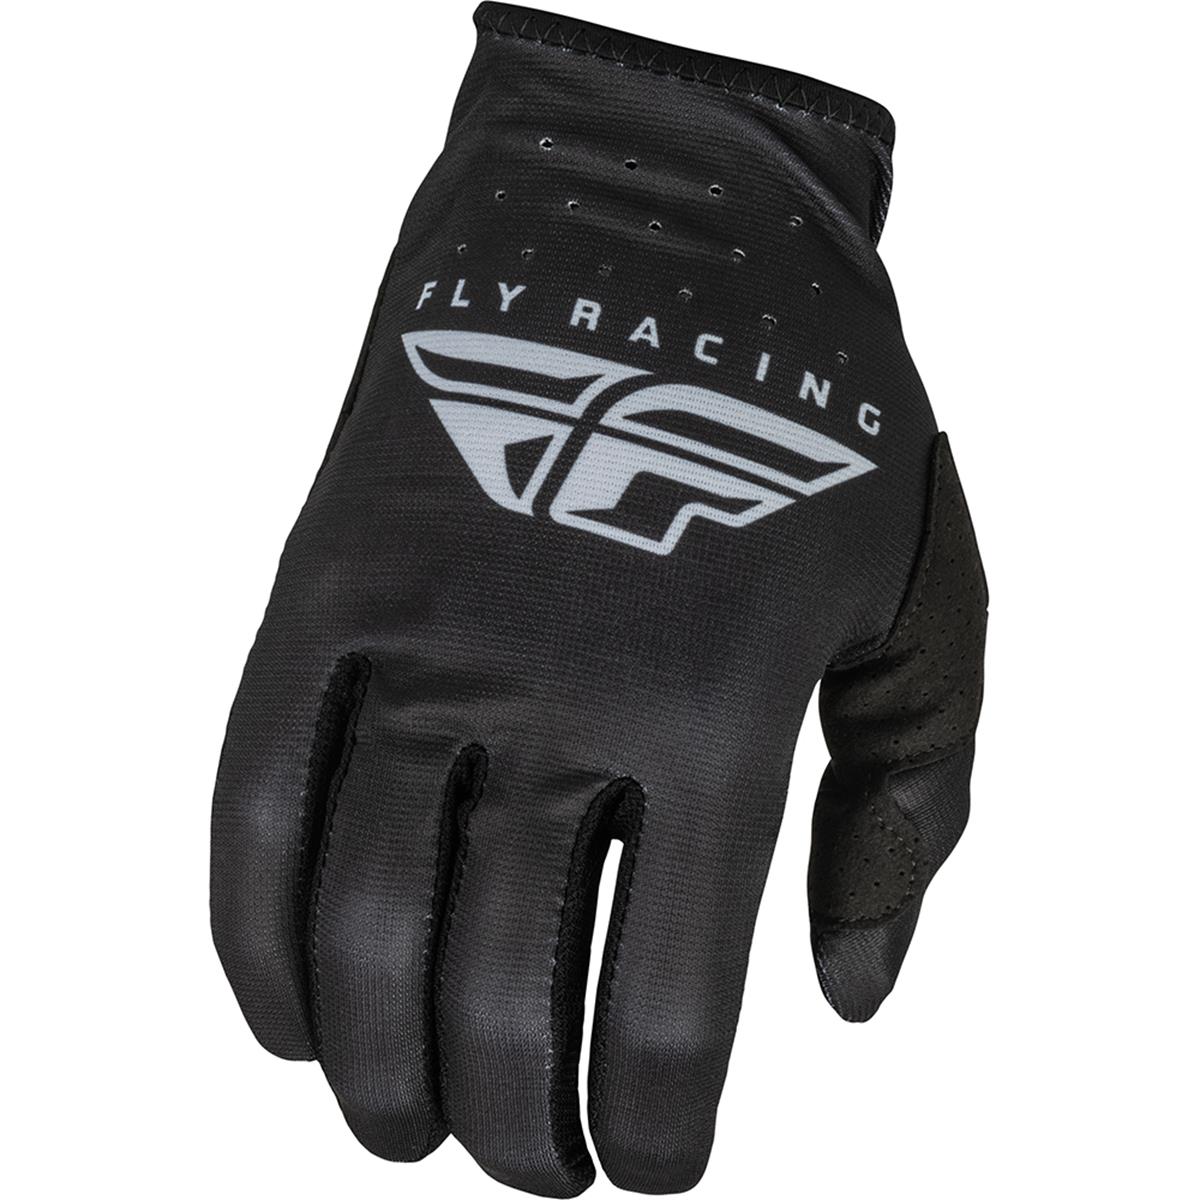 Fly Racing Handschuhe Lite Schwarz/Grau